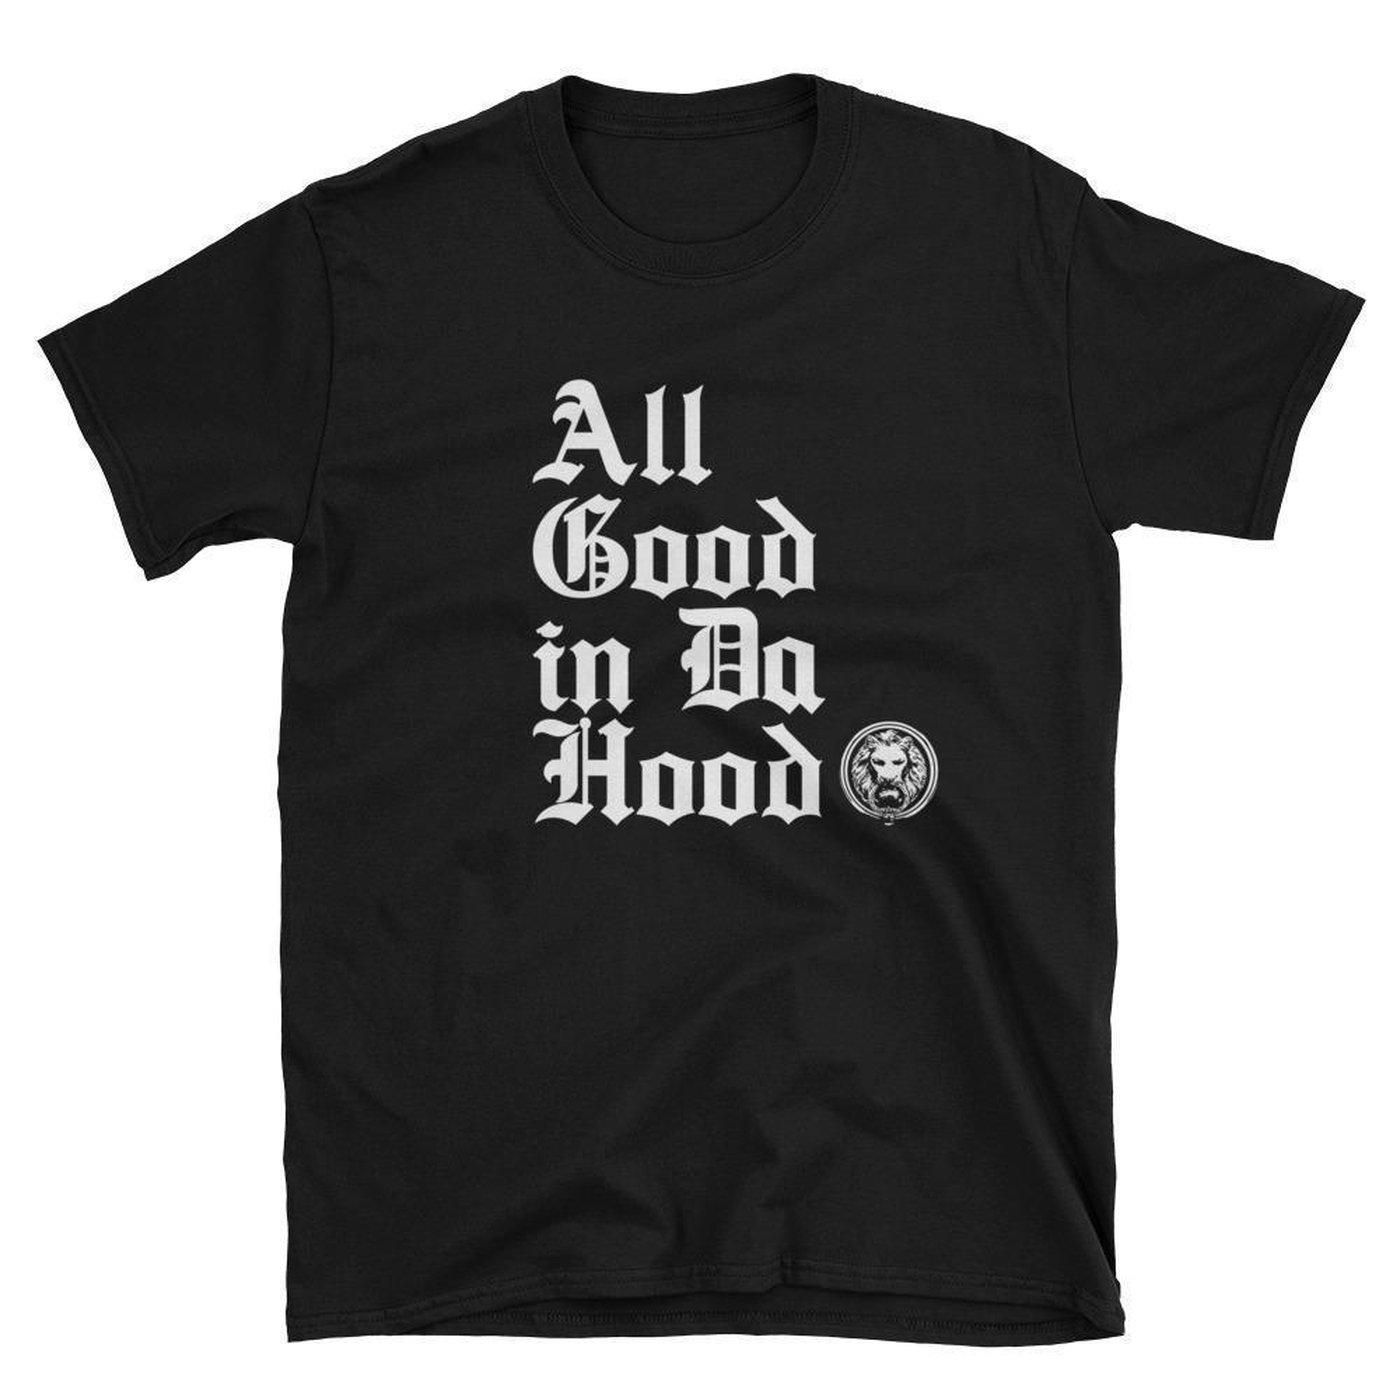 NO FIXED ABODE,All Good in Da Hood Short-Sleeve T-Shirt,T-Shirts,Black / S